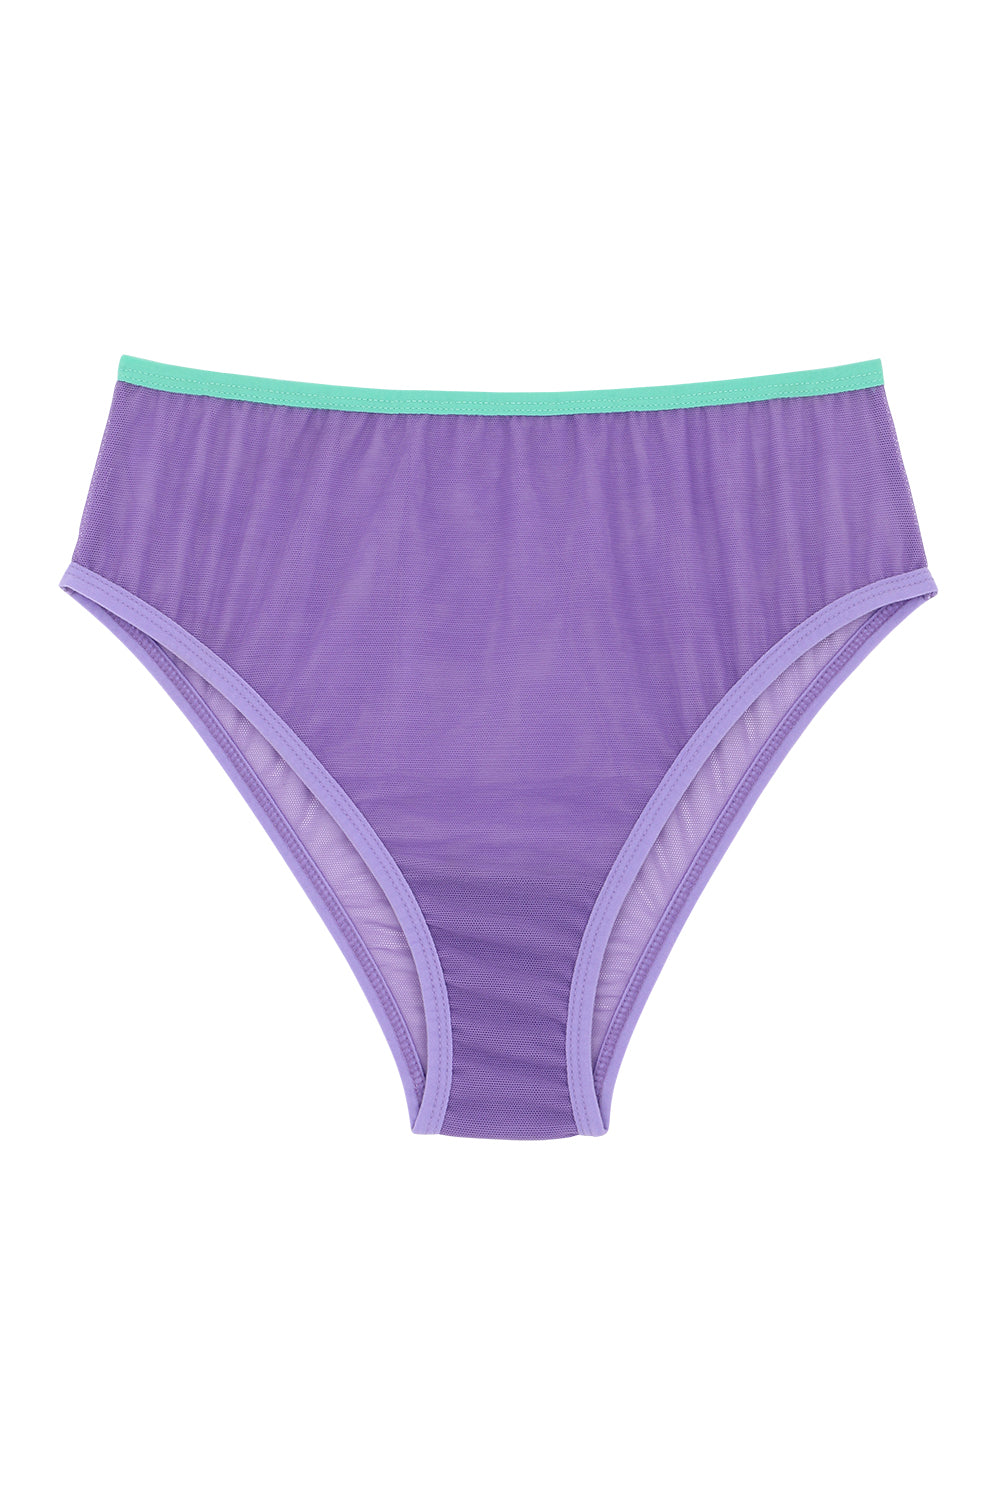 Culotte Taille Haute Tulle - Violet